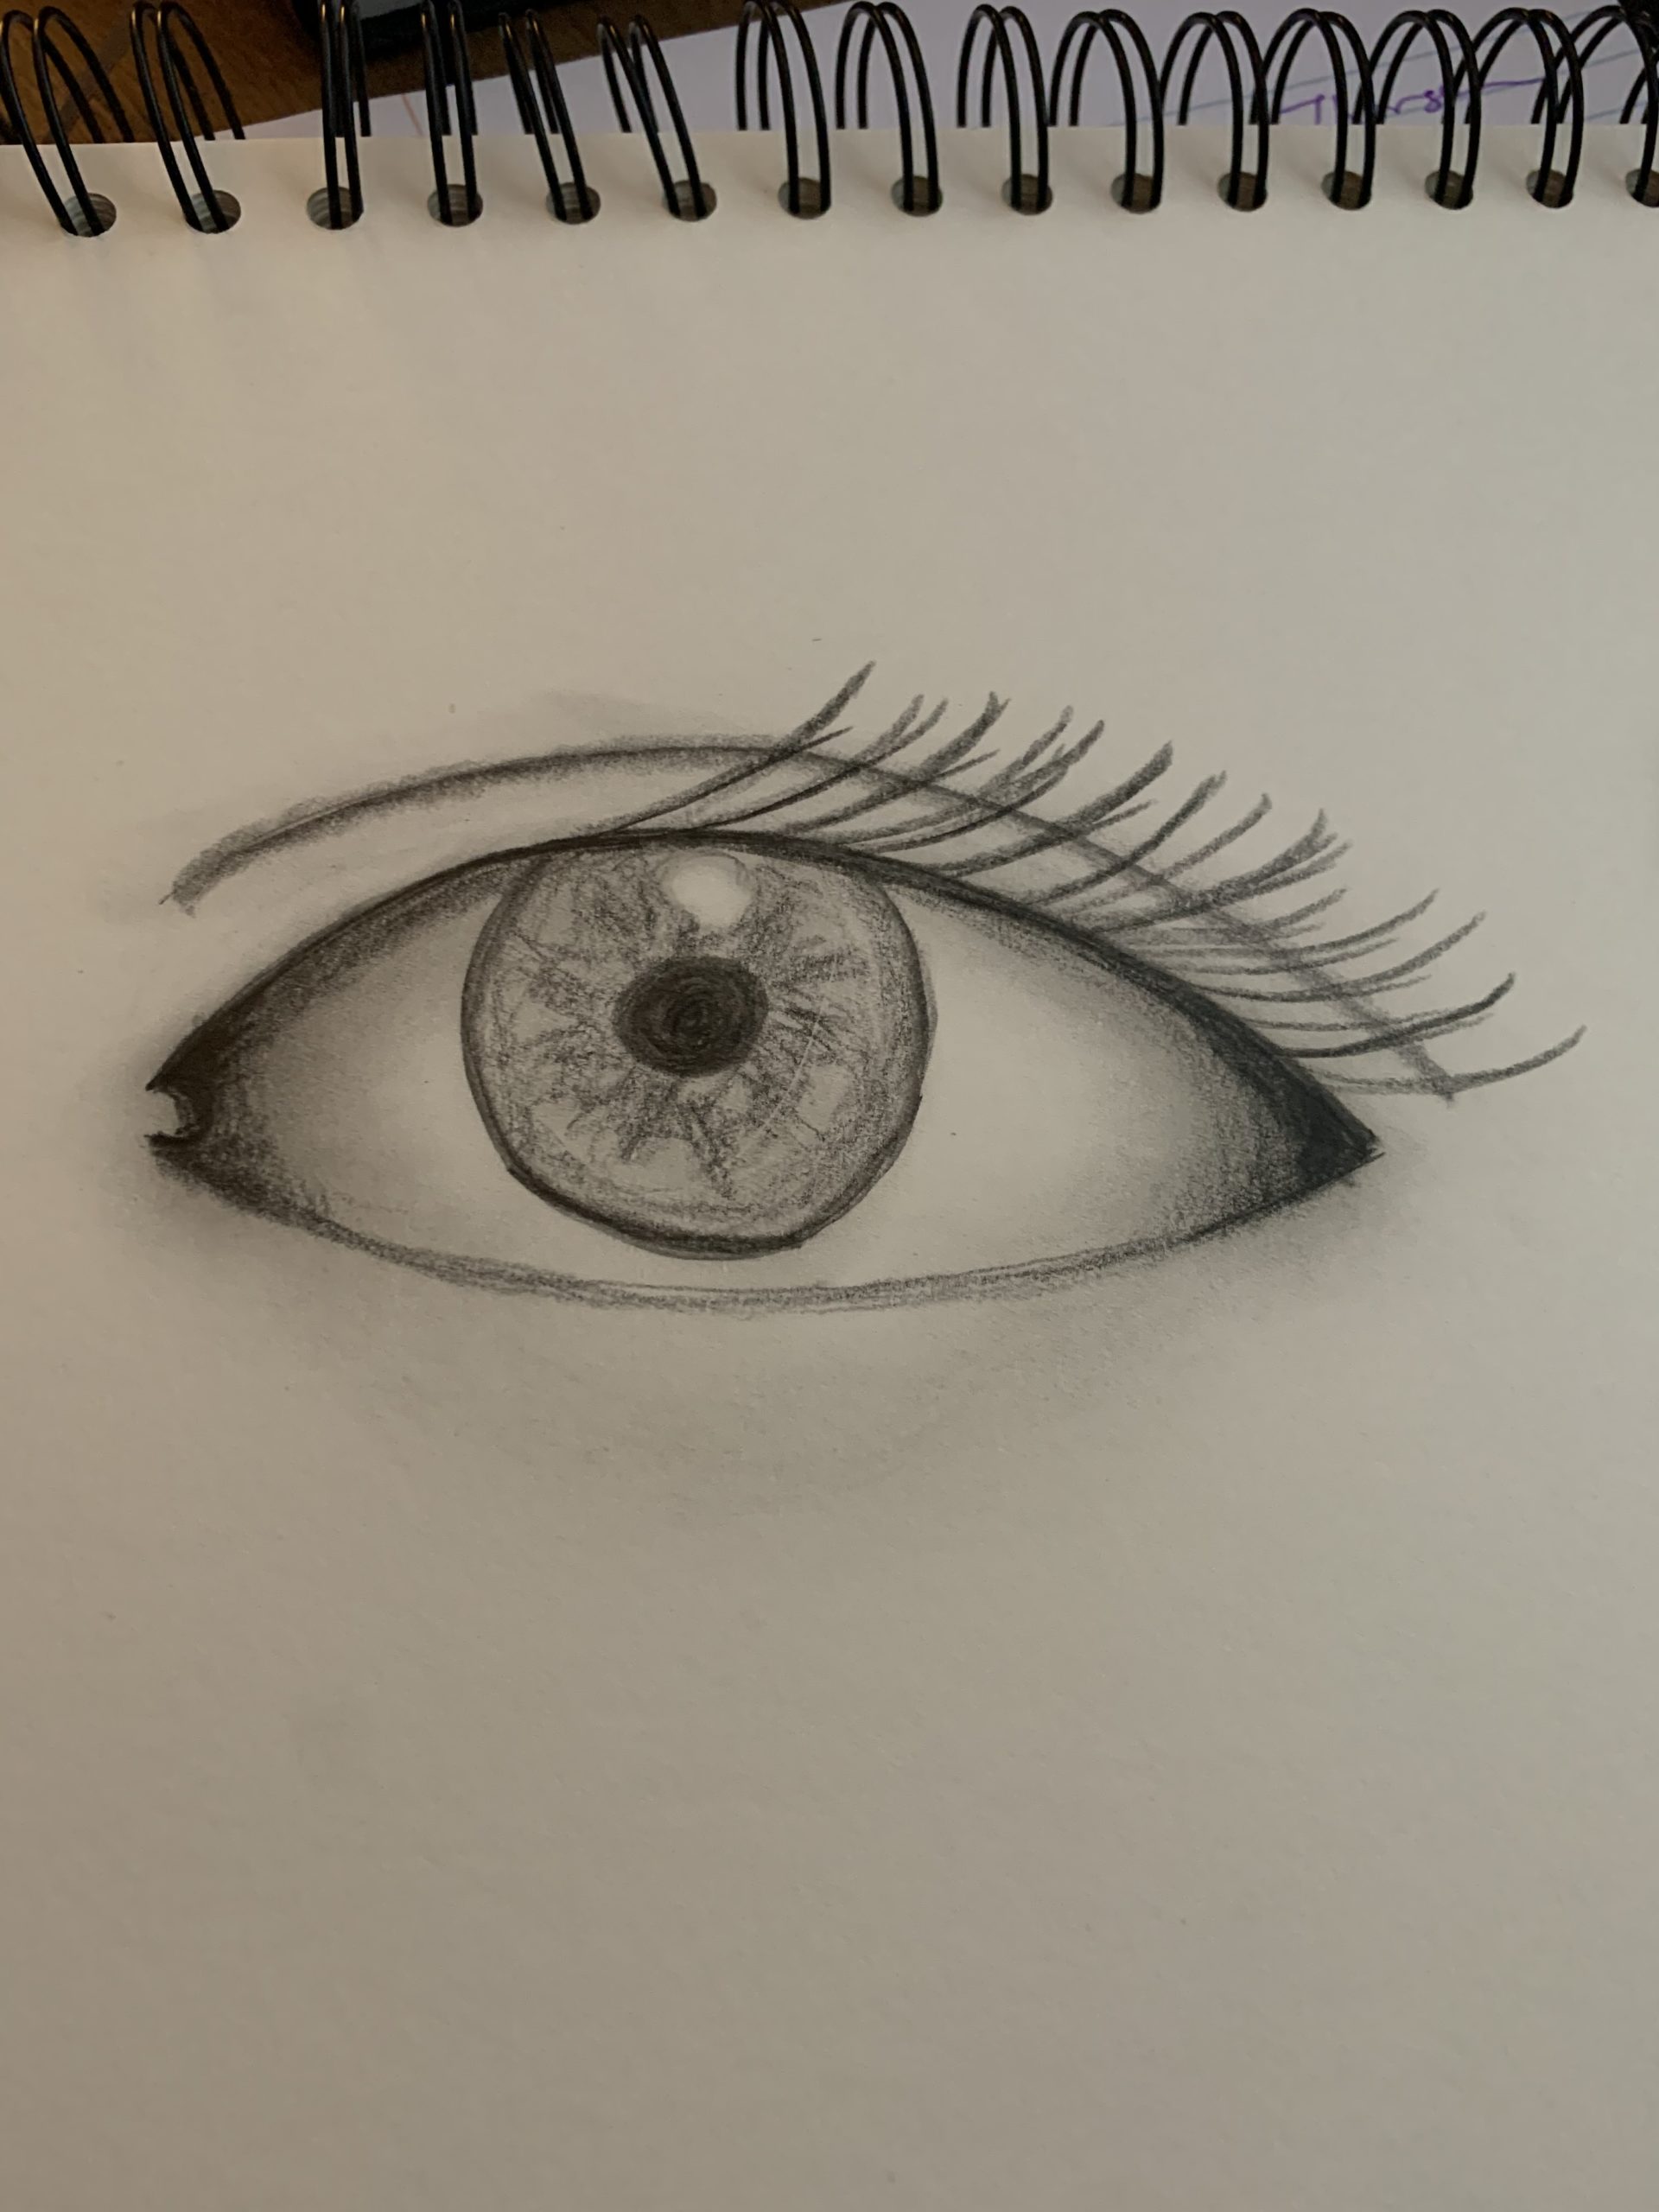 My drawing of an eye